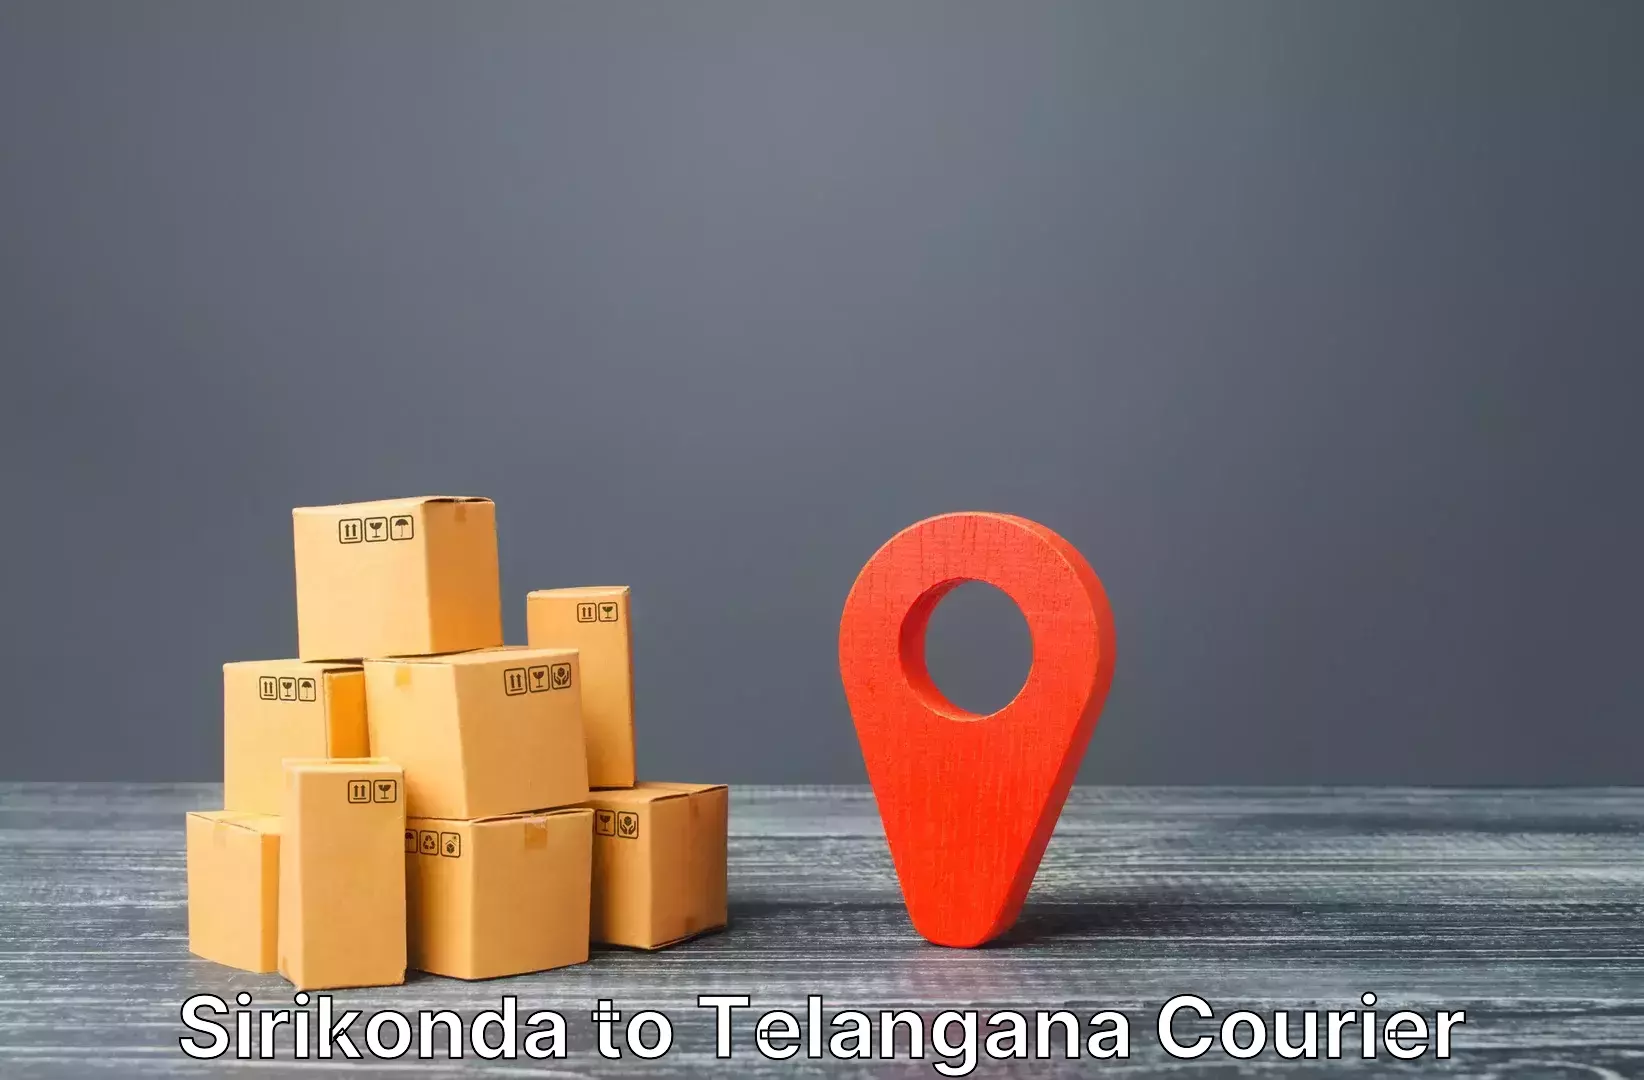 Baggage relocation service in Sirikonda to Manuguru